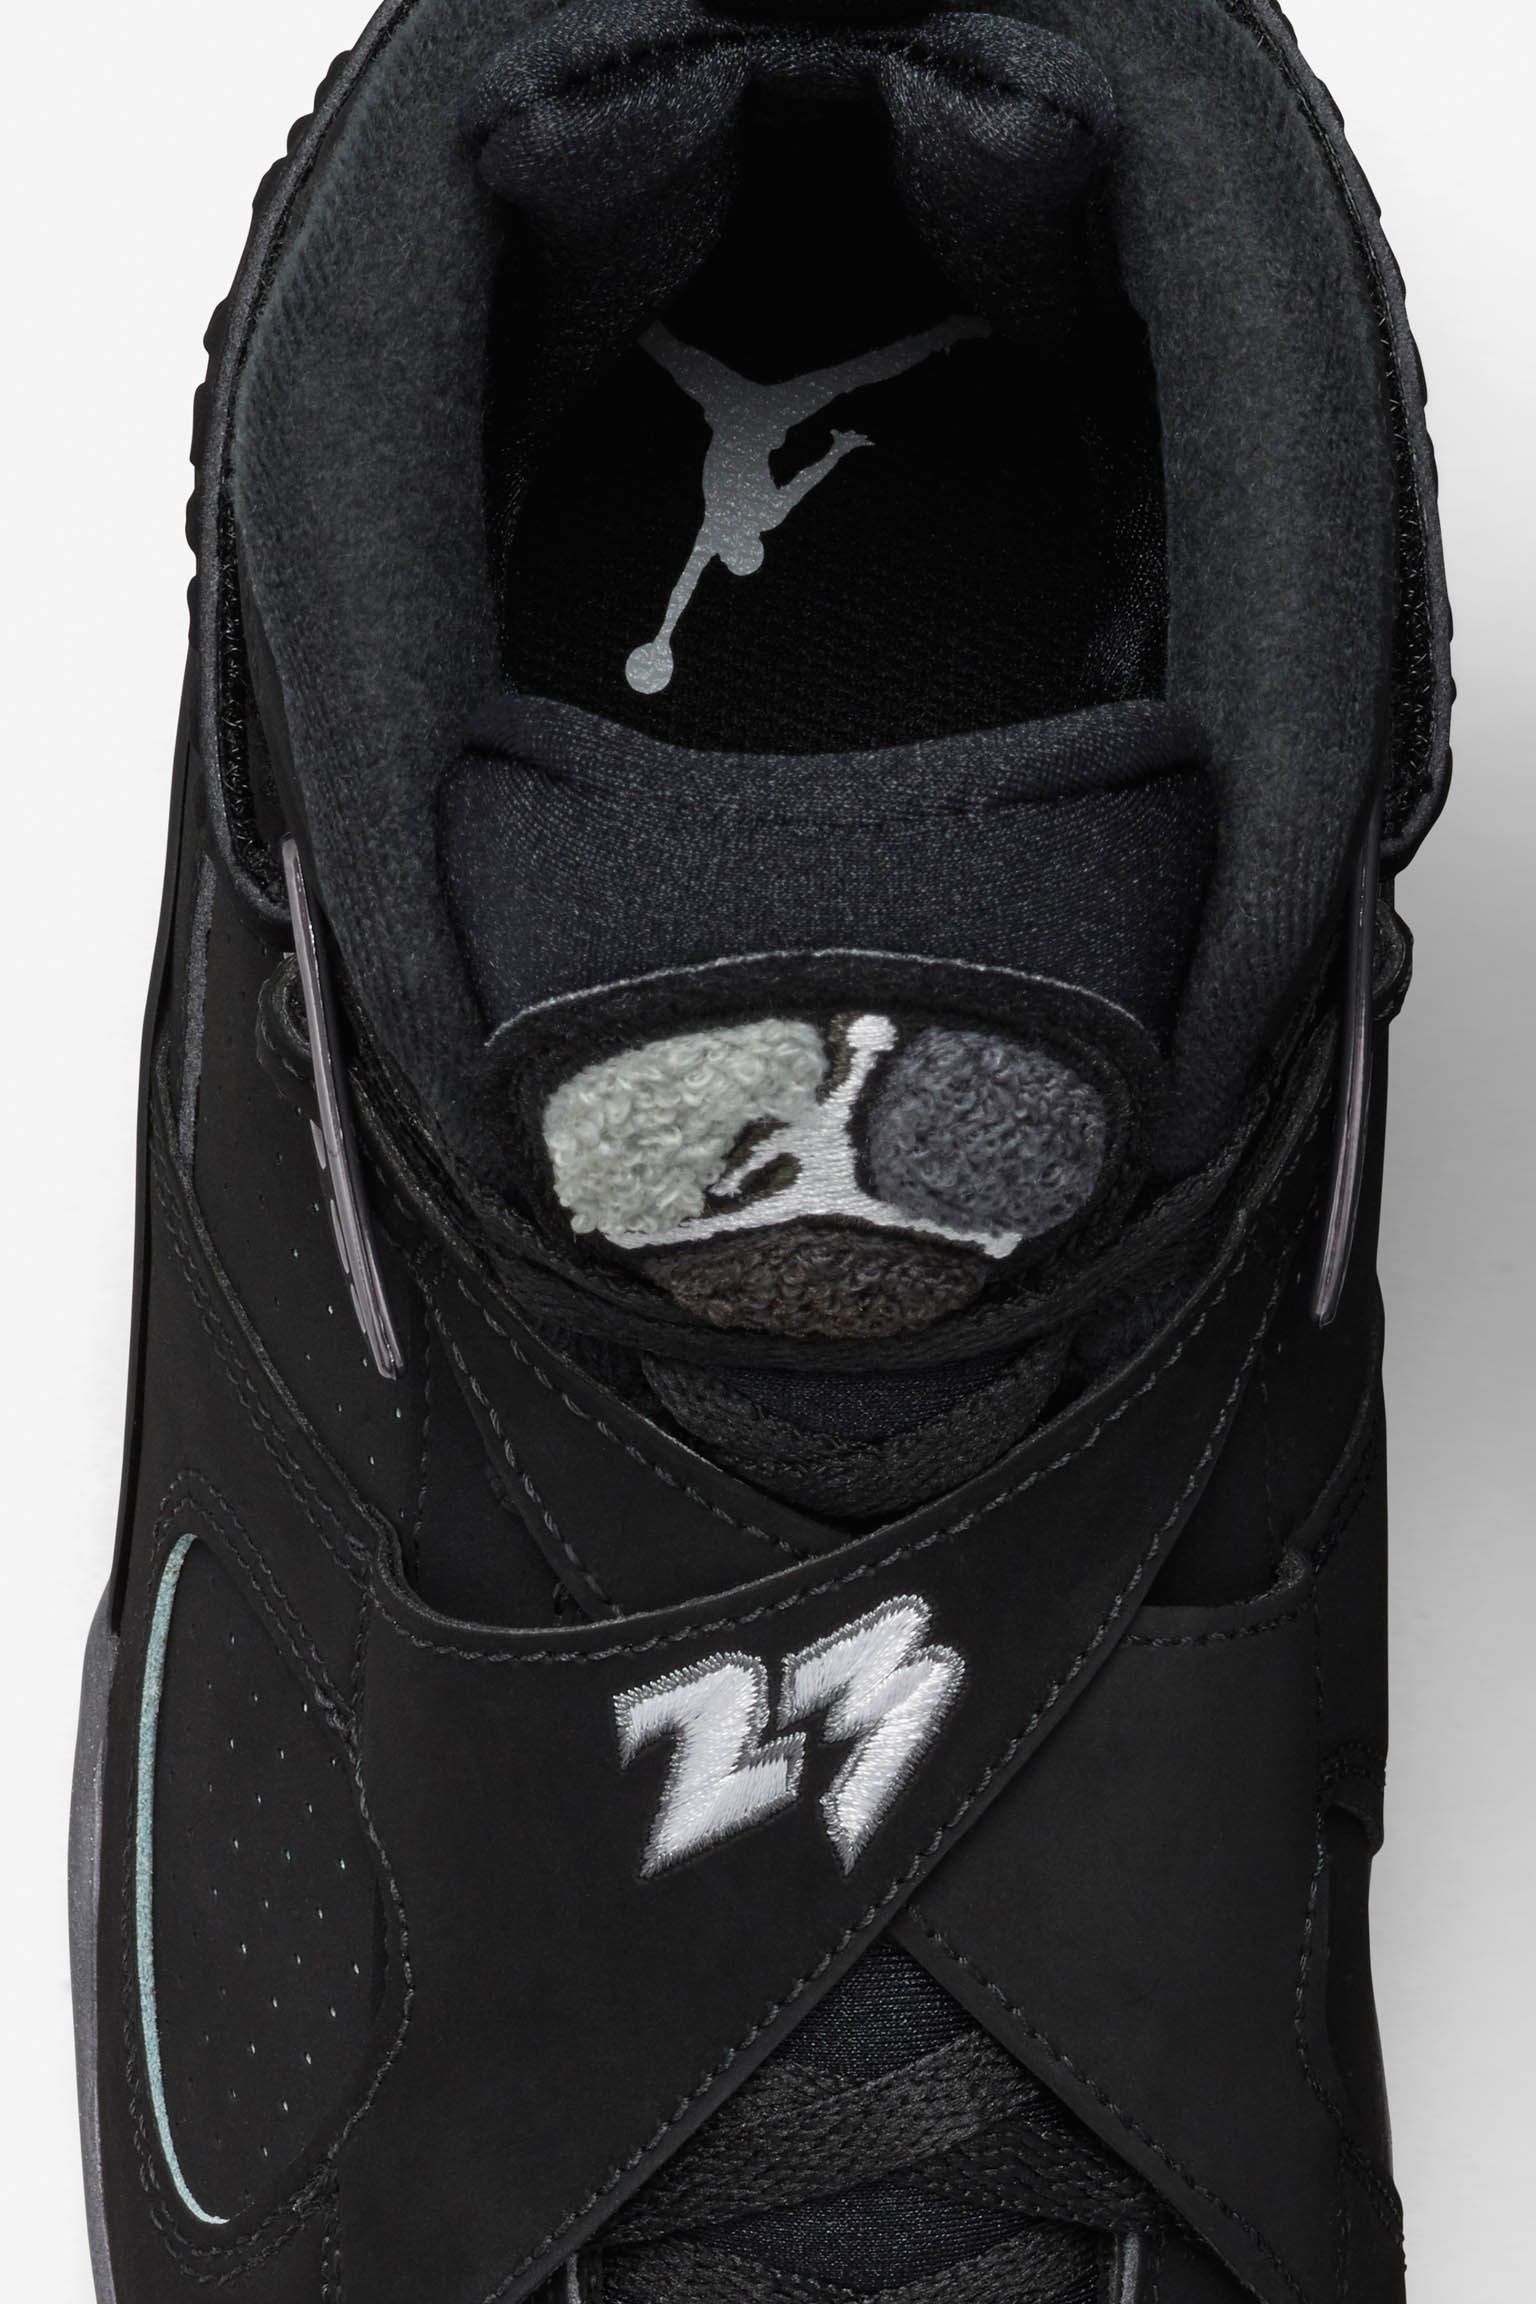 Air Jordan 8 Retro 'Chrome' Release Date. Nike⁠+ SNKRS